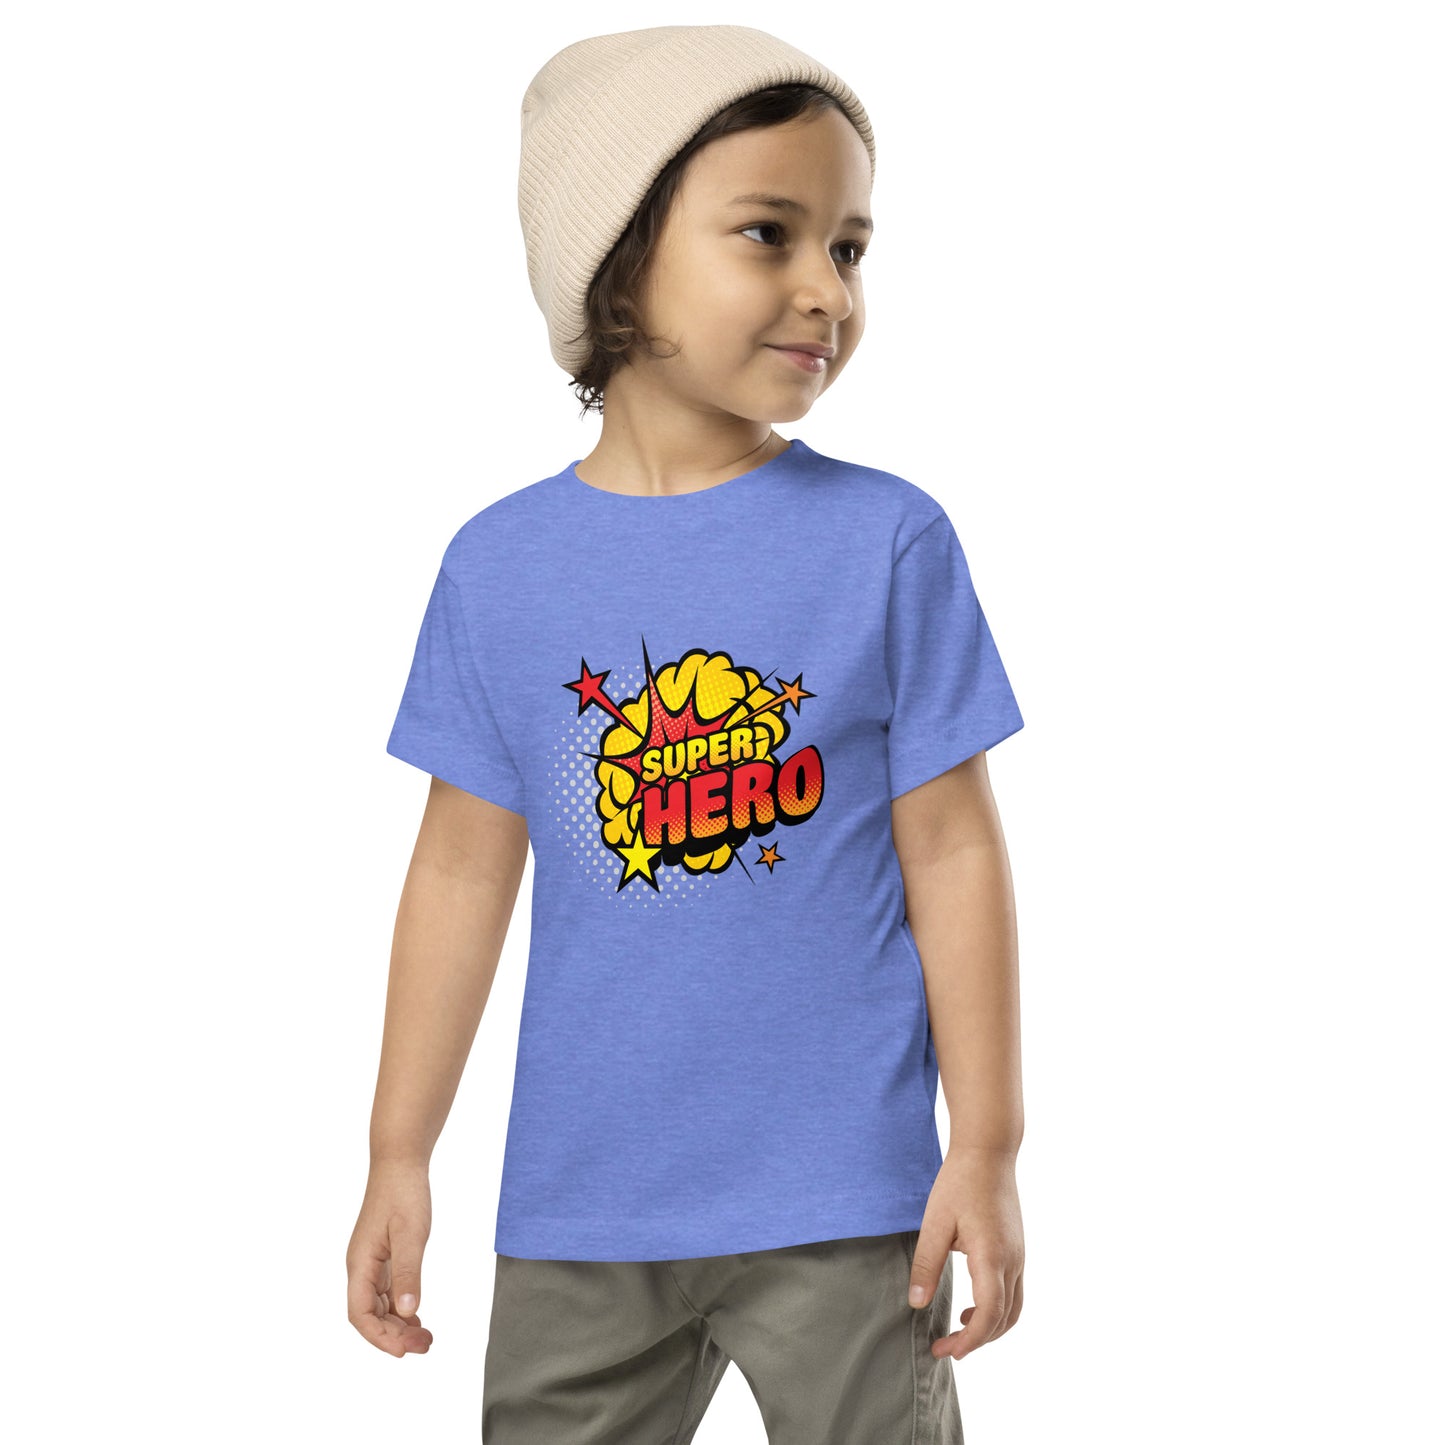 Super Hero - Toddler Short Sleeve Tee